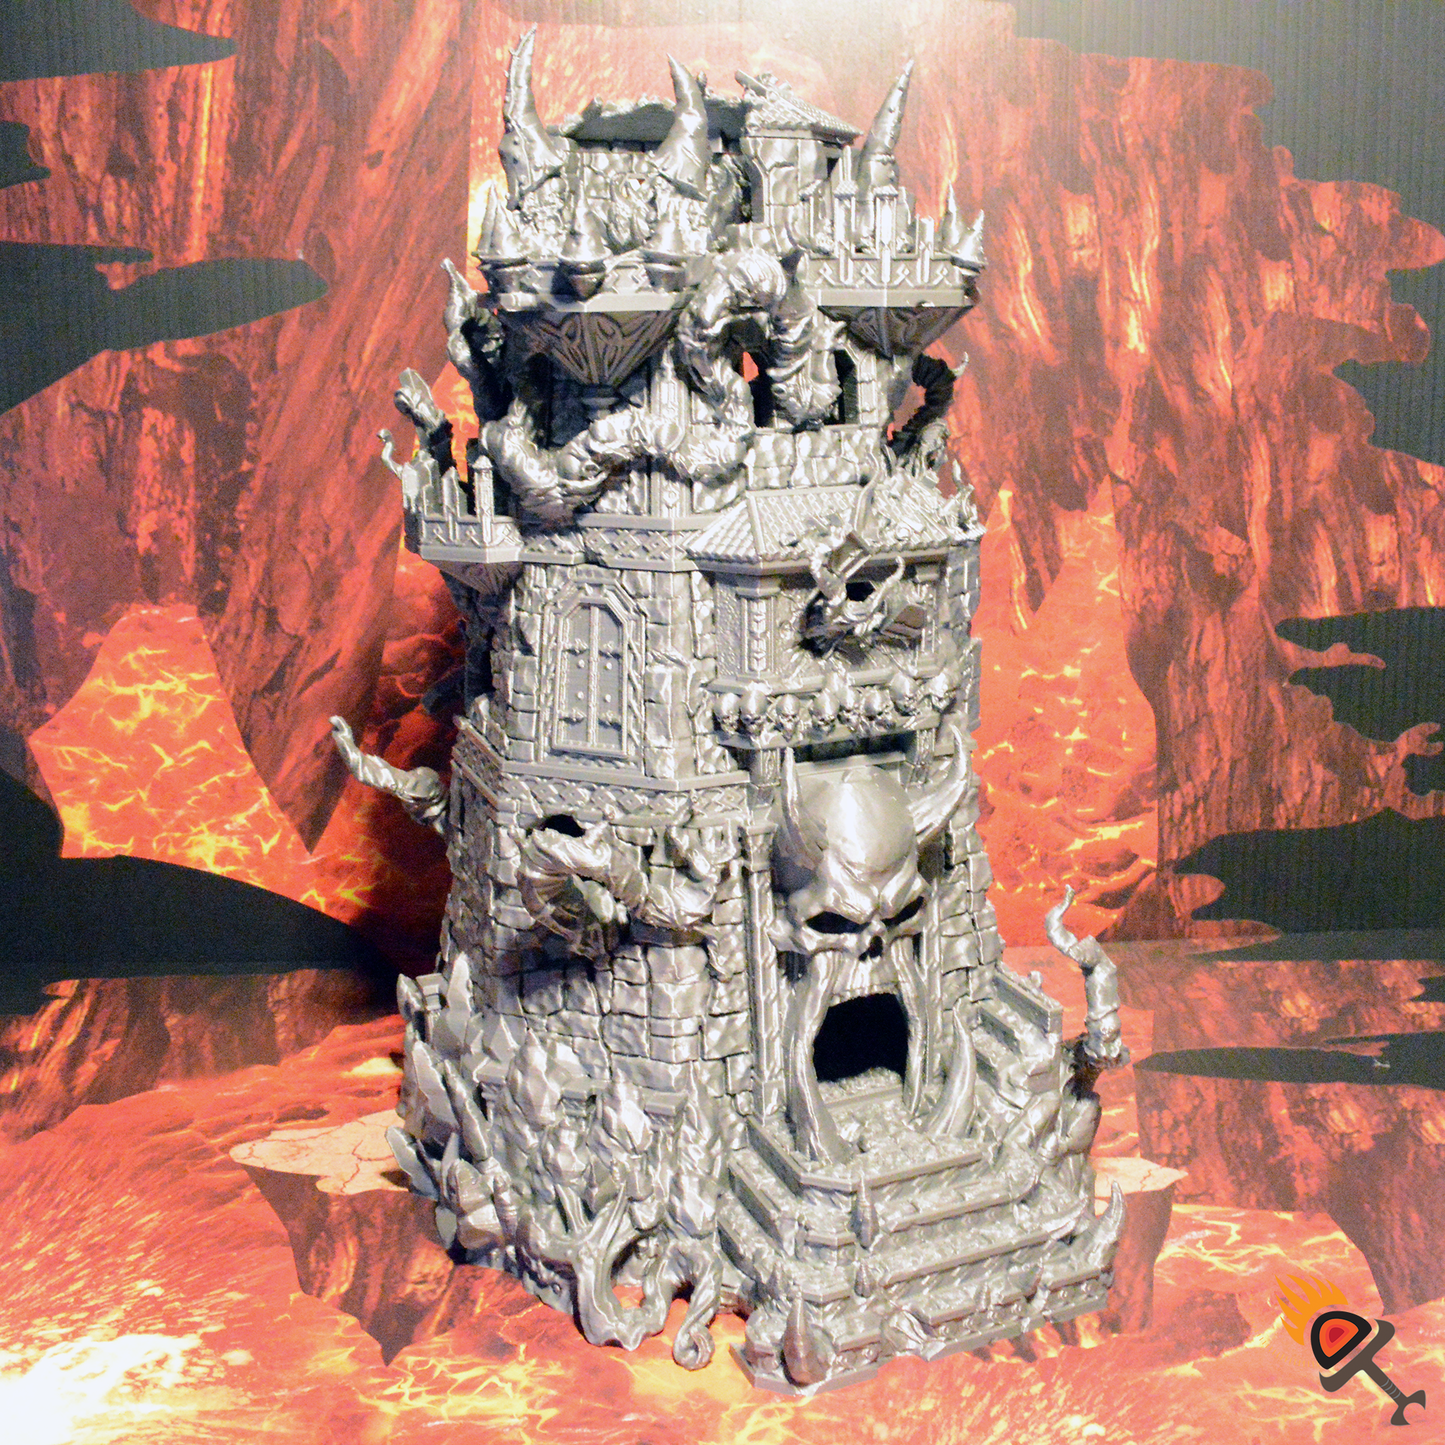 Miniature Demon Tower 15mm 28mm for D&D Terrain, Demonhelm for DnD Pathfinder Wargame Skirmish Games, Gift for Tabletop Gamers